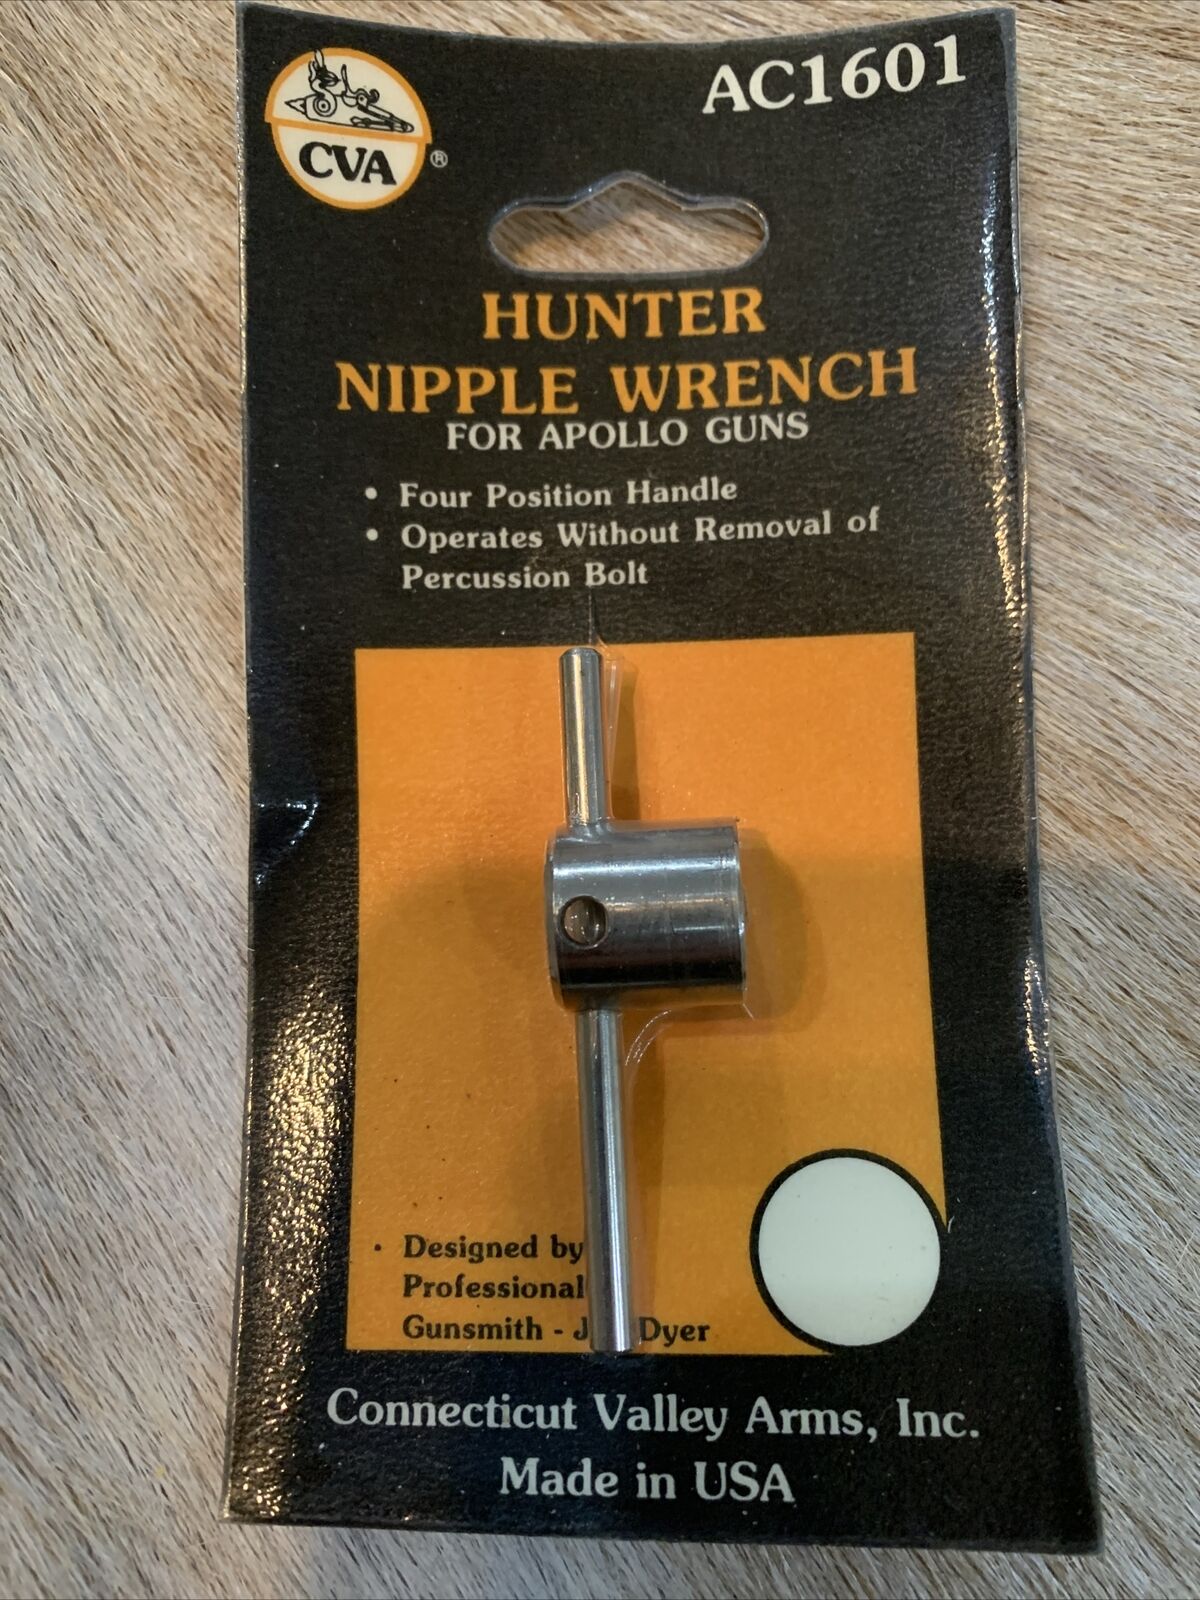 CVA Hunter Nipple Wrench AC1601